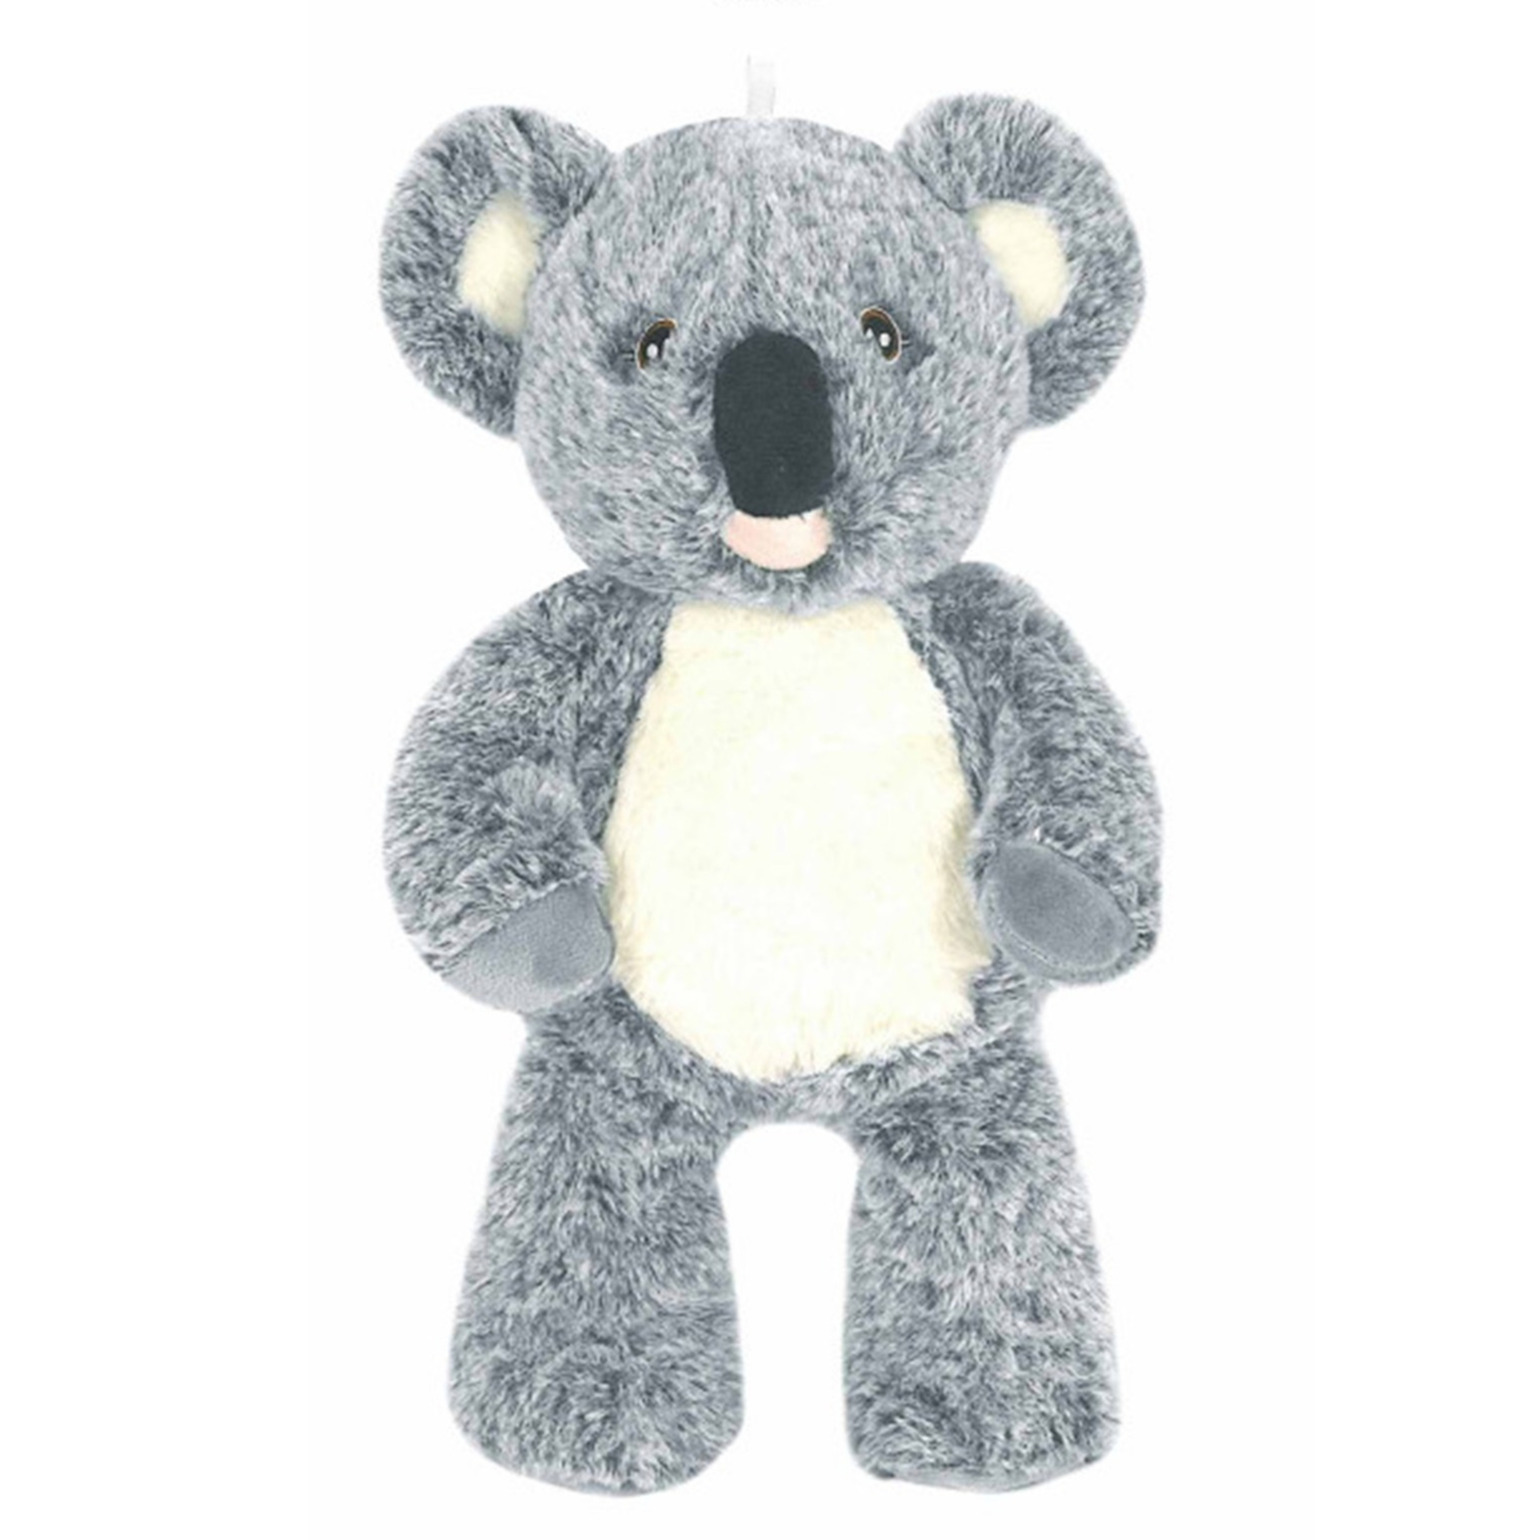 Knuffeldier Koala Aussie - zachte pluche stof - dieren knuffels - grijs - 25 cm -